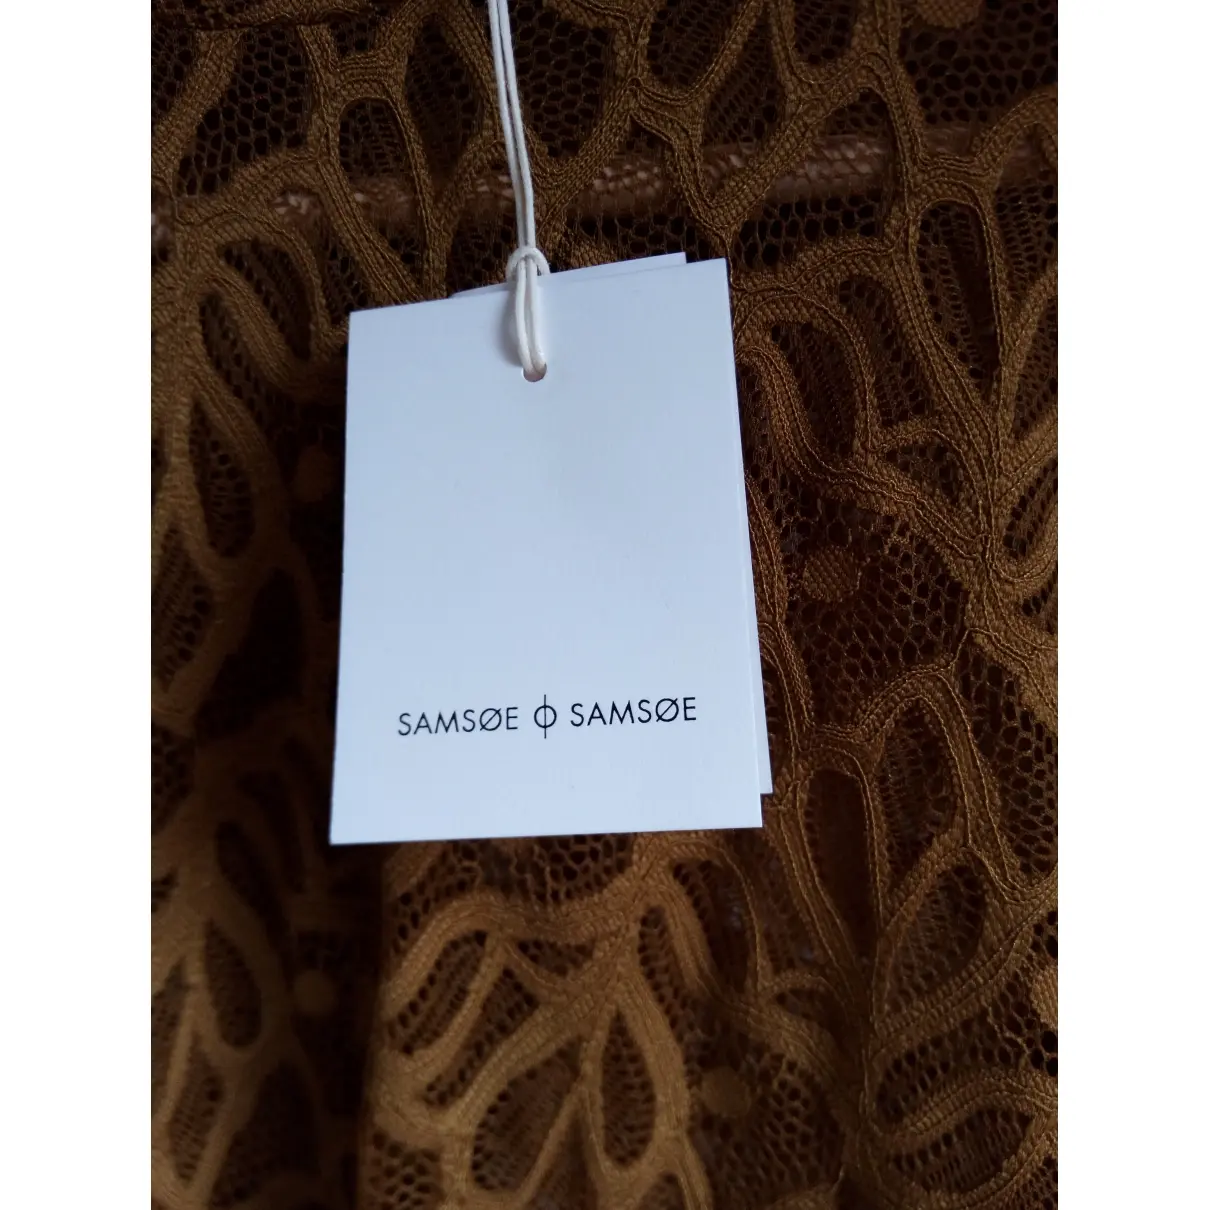 Buy Samsoe & Samsoe Lace blouse online